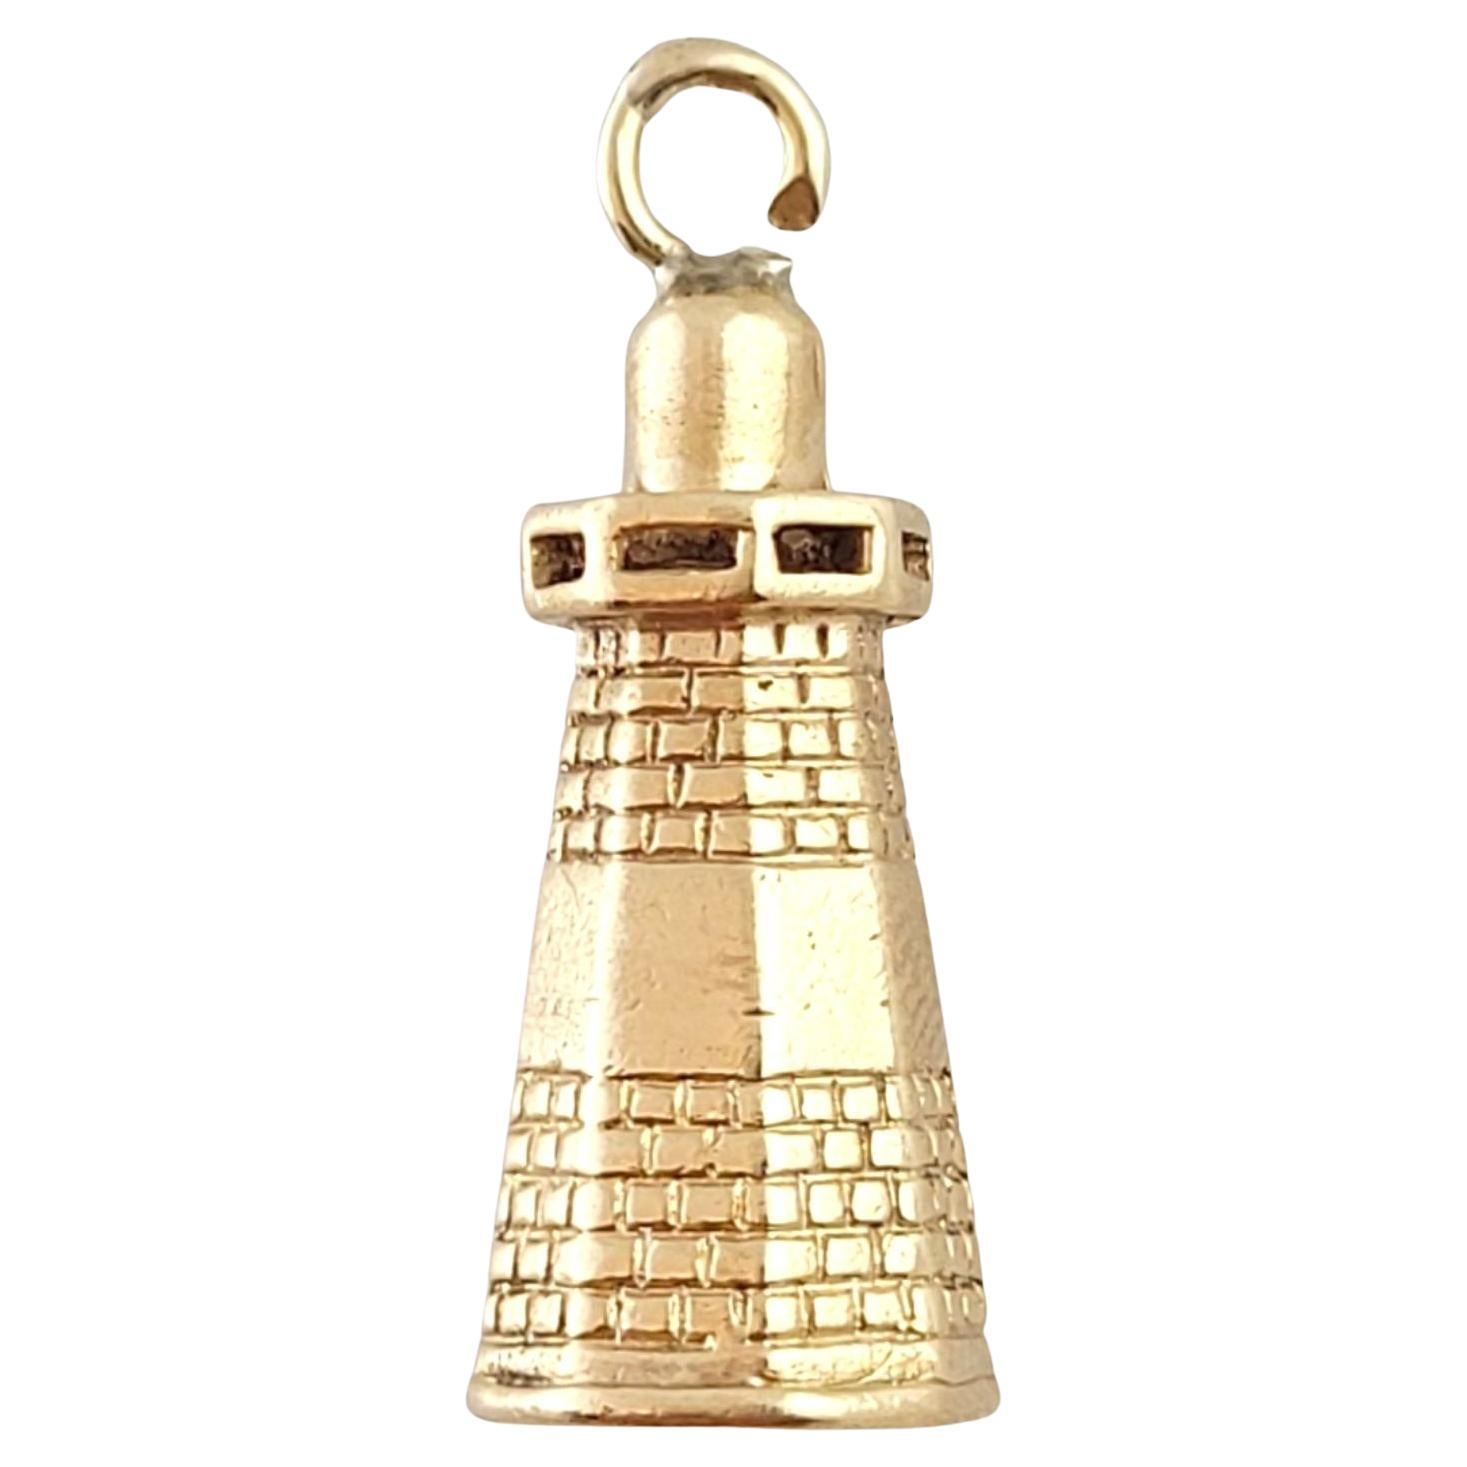 Lighthouse Charm aus 14 Karat Gelbgold #14861